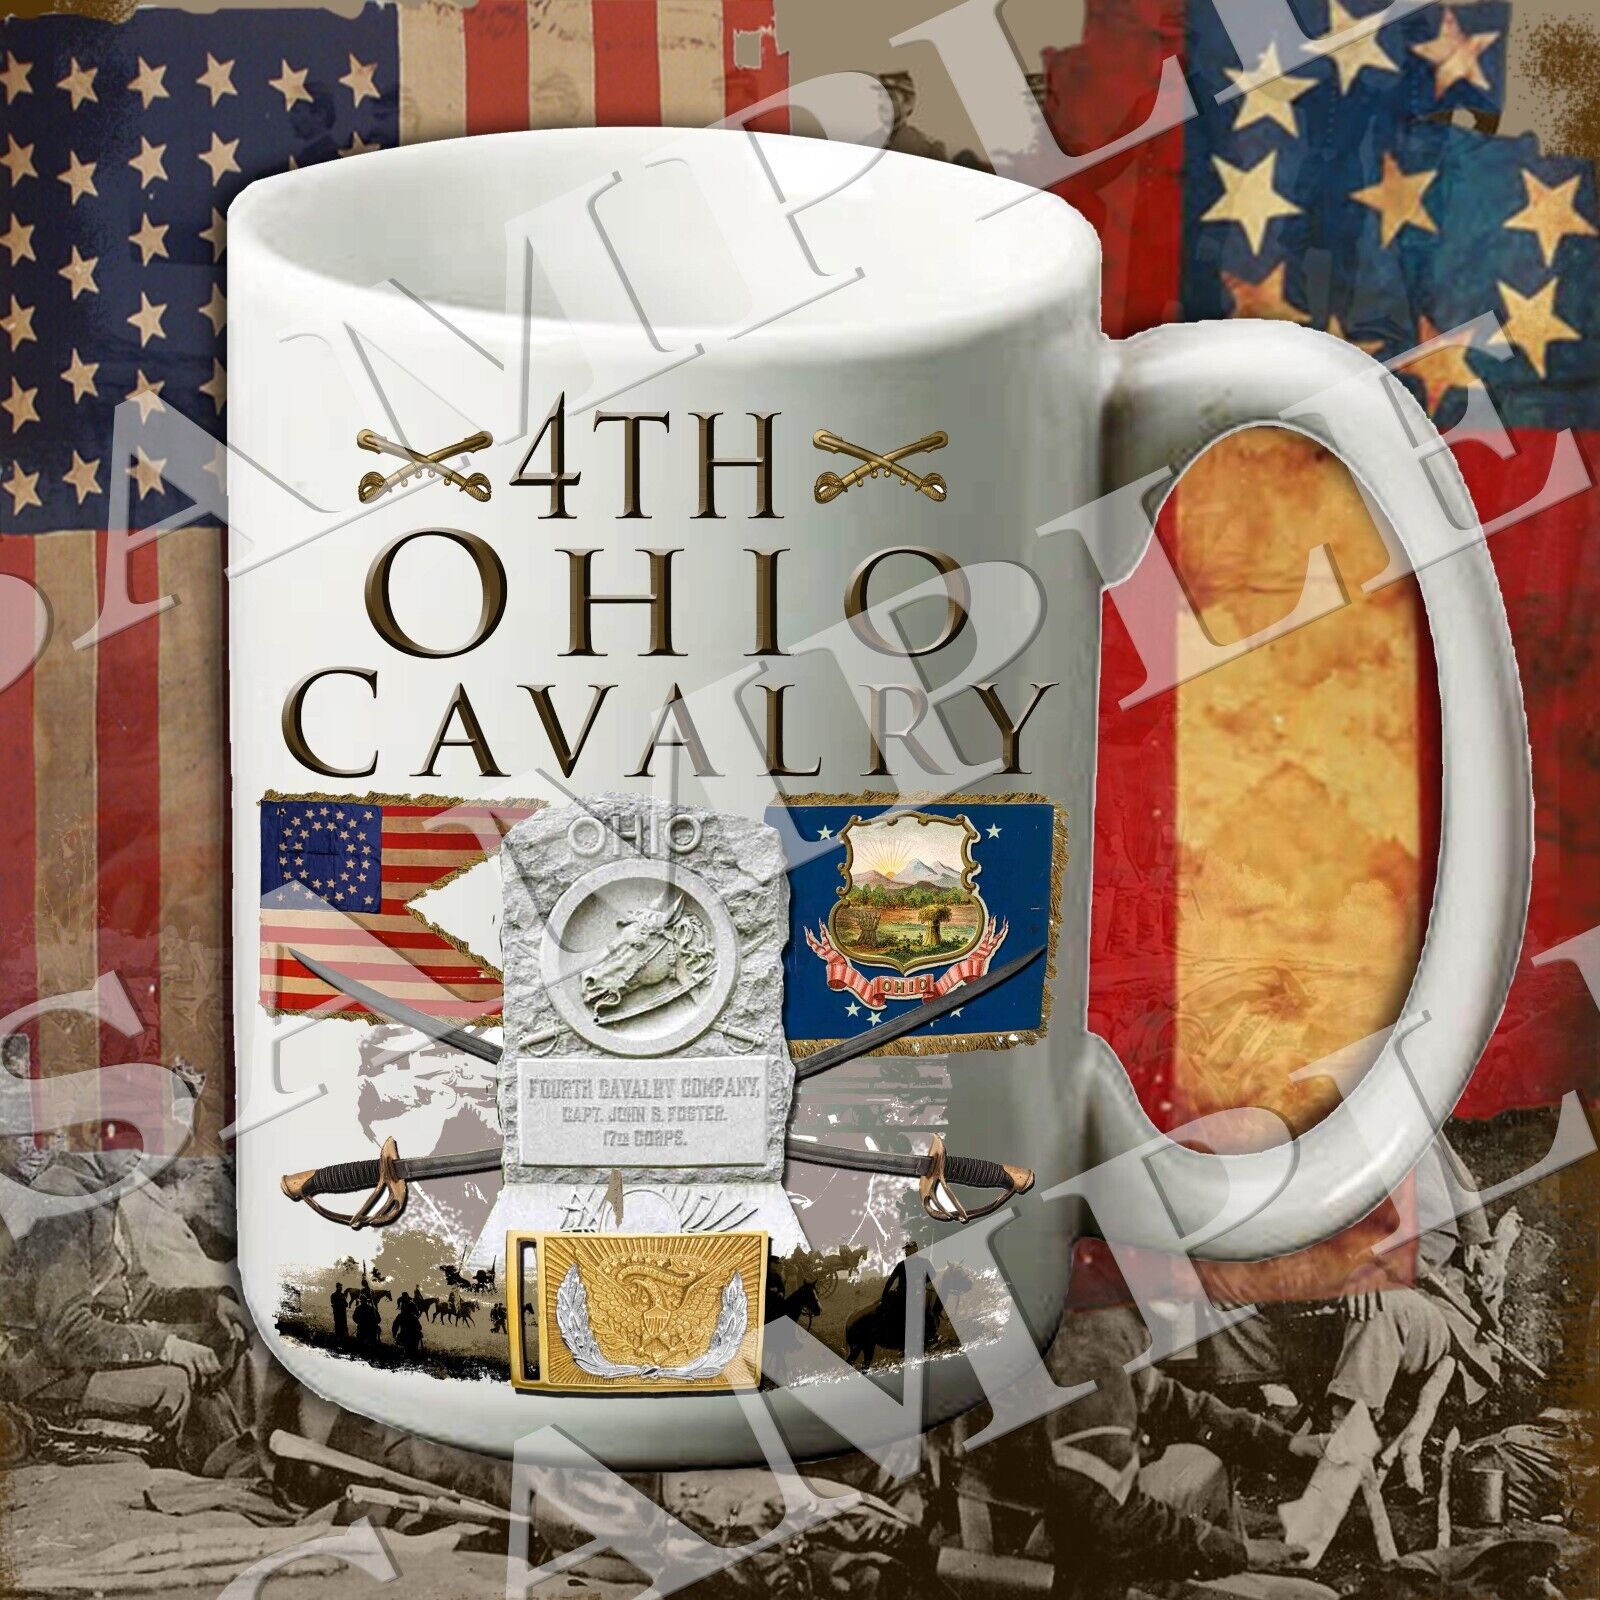 4th Ohio Cavalry 15-ounce American Civil War themed coffee mug/cup